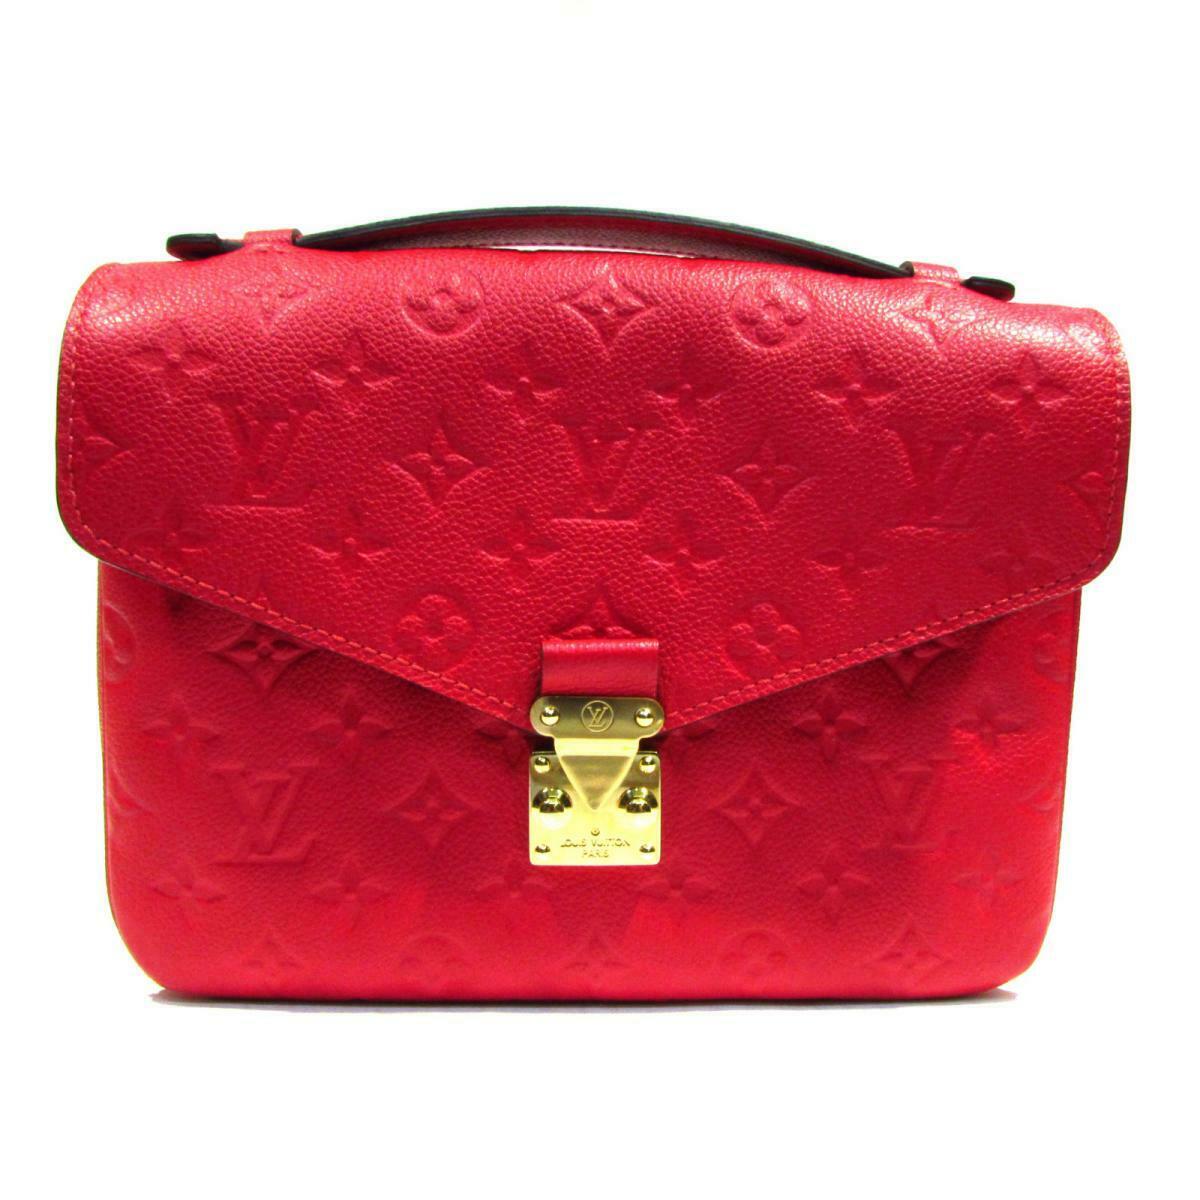 Only Luxury - Bolsa Louis Vuitton Color: Roja Clones de